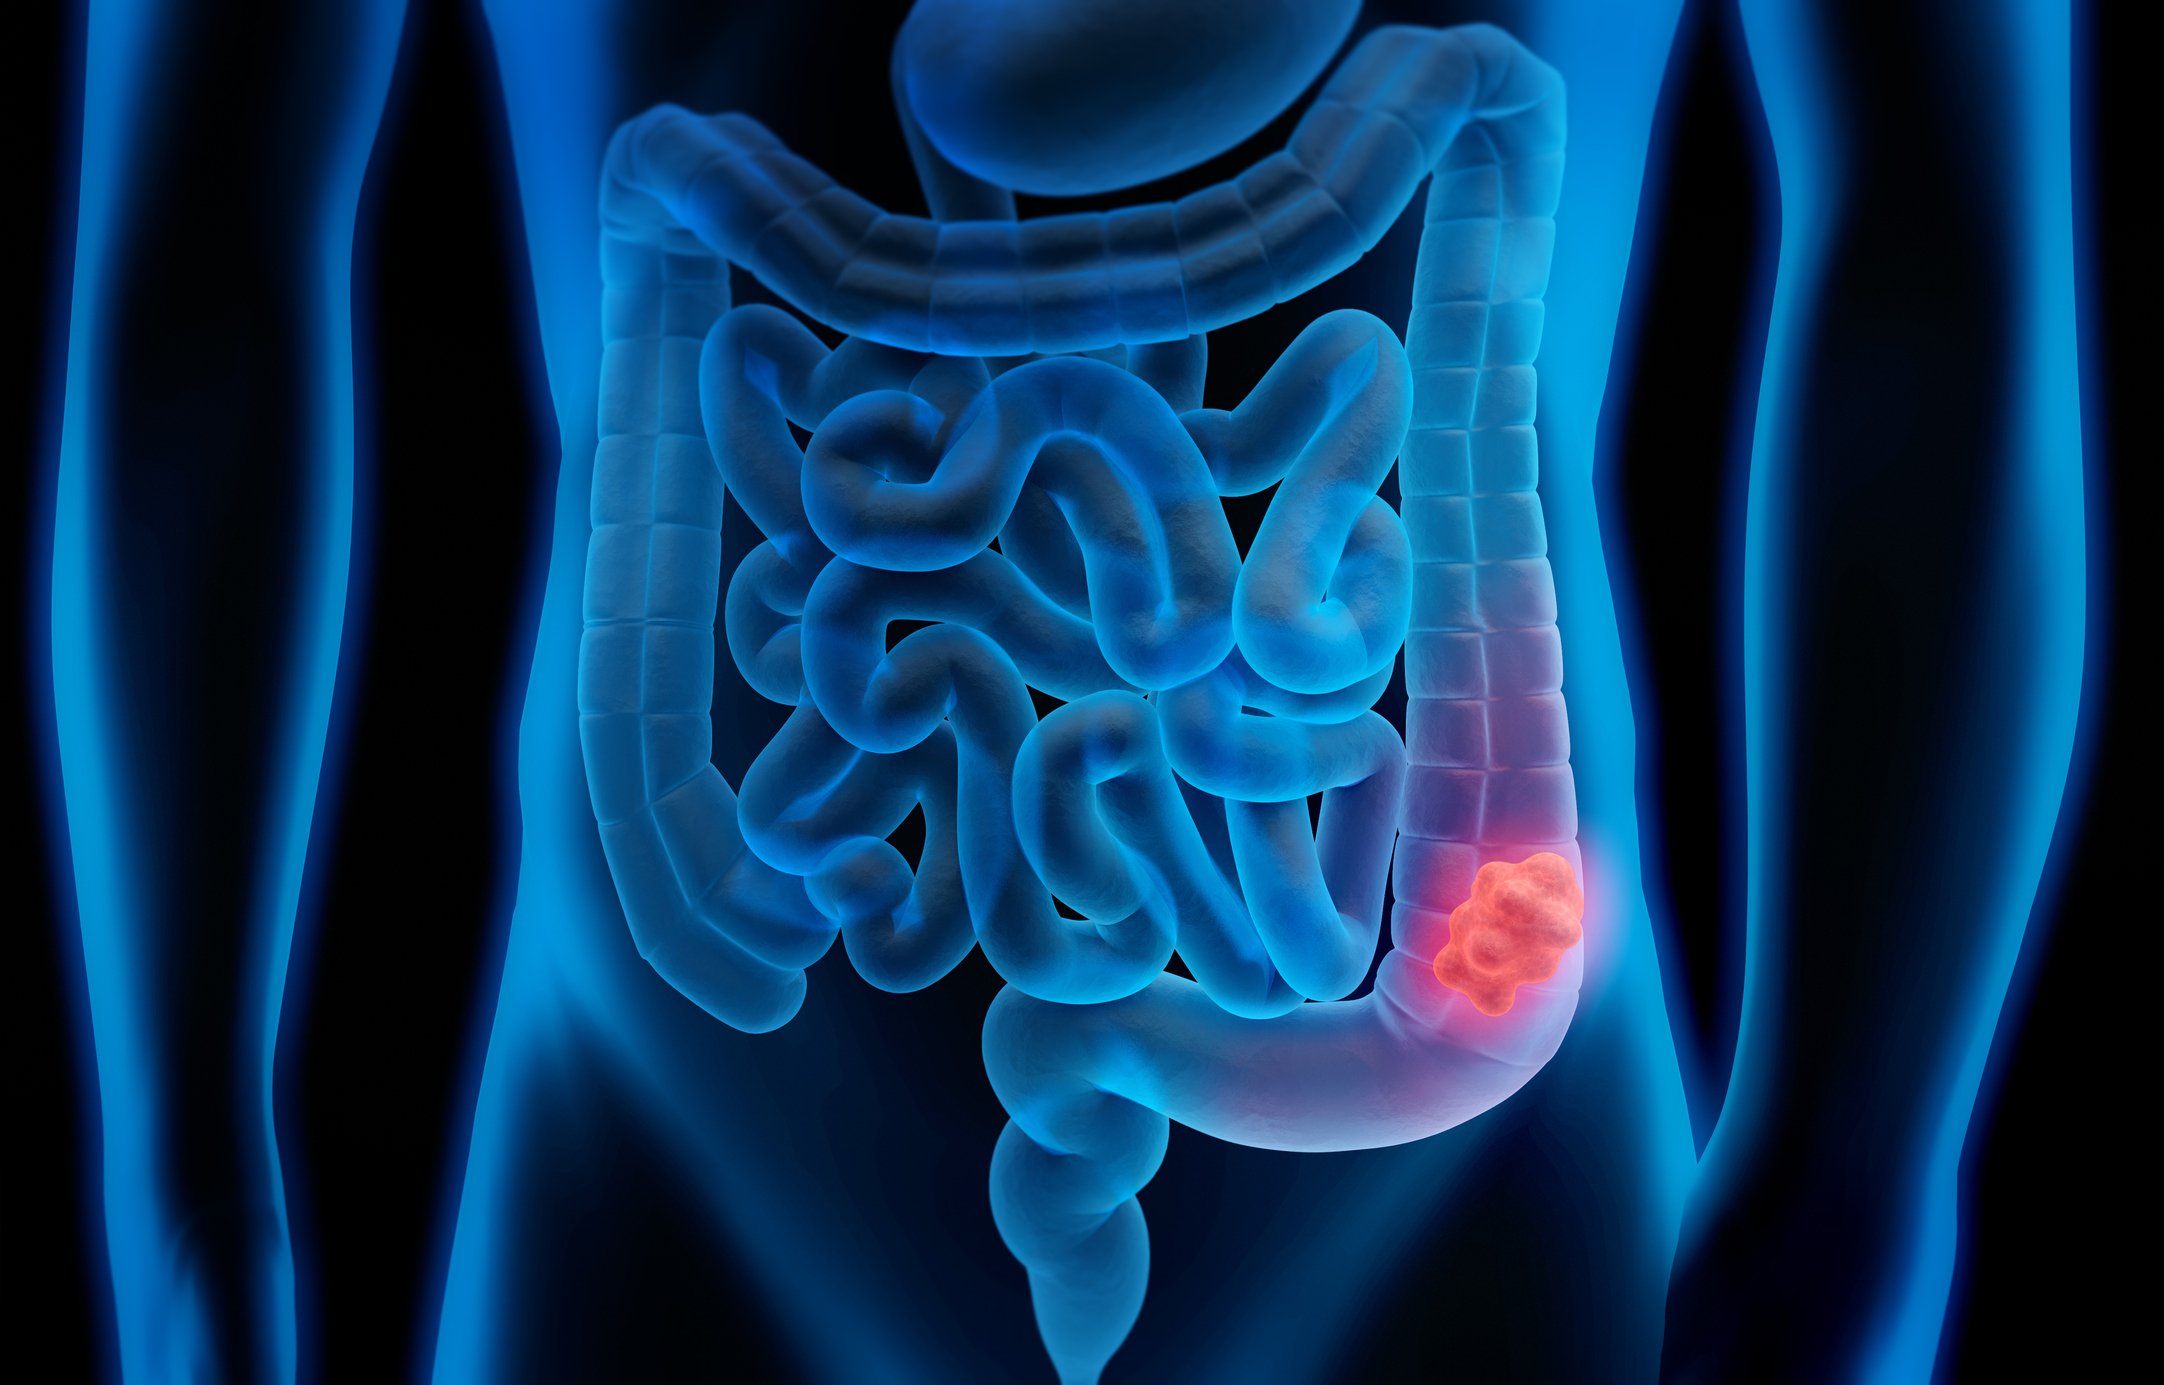 A 3D illustration of colon cancer